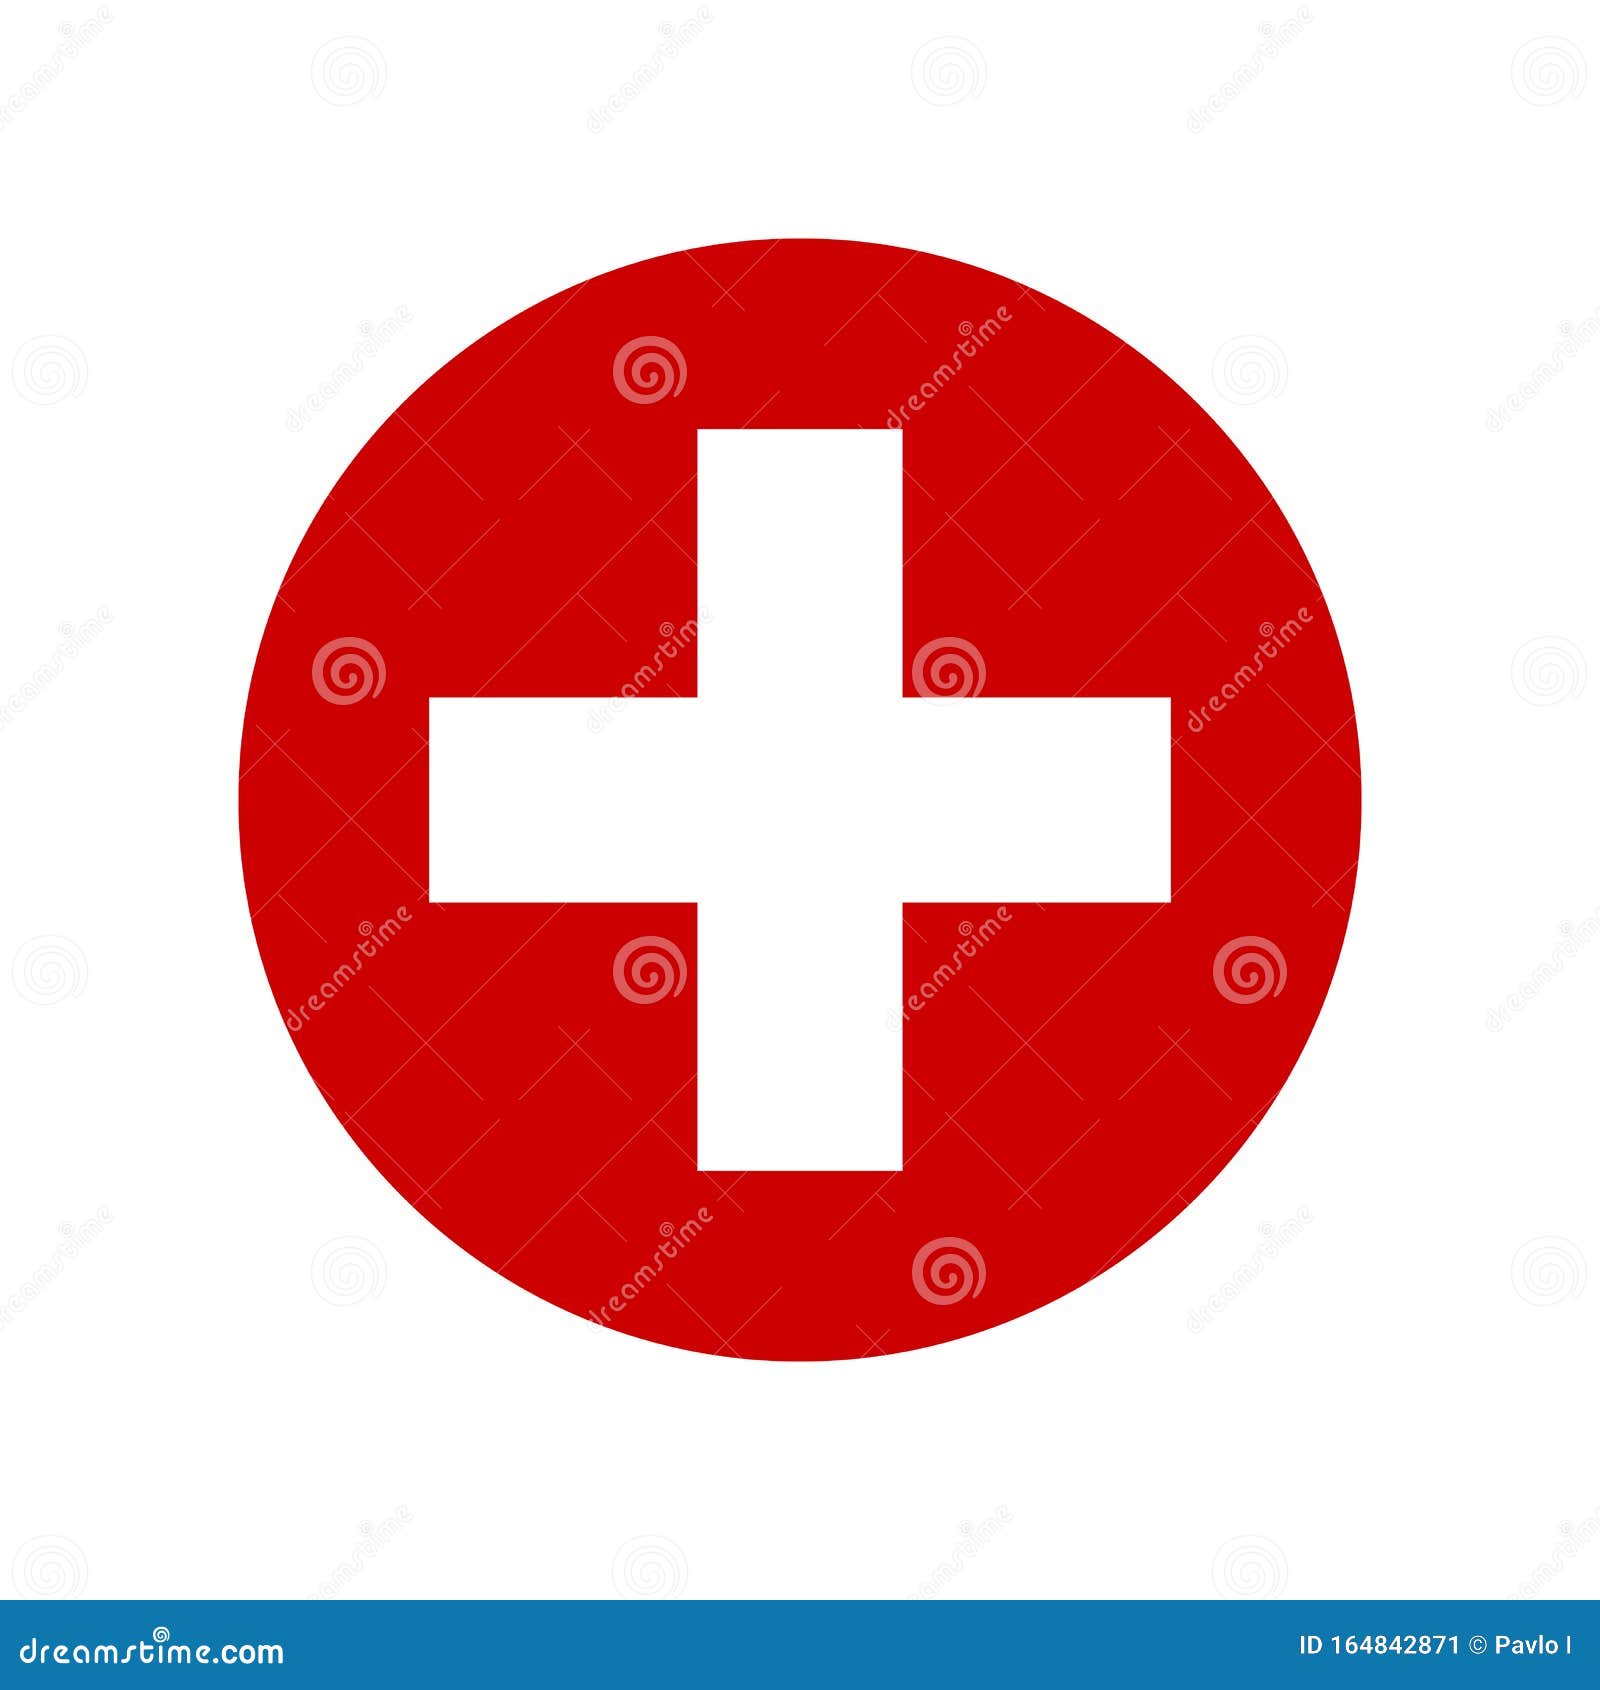 White Cross on Red Circle Background - Vector Stock Illustration -  Illustration of round, ambulance: 164842871